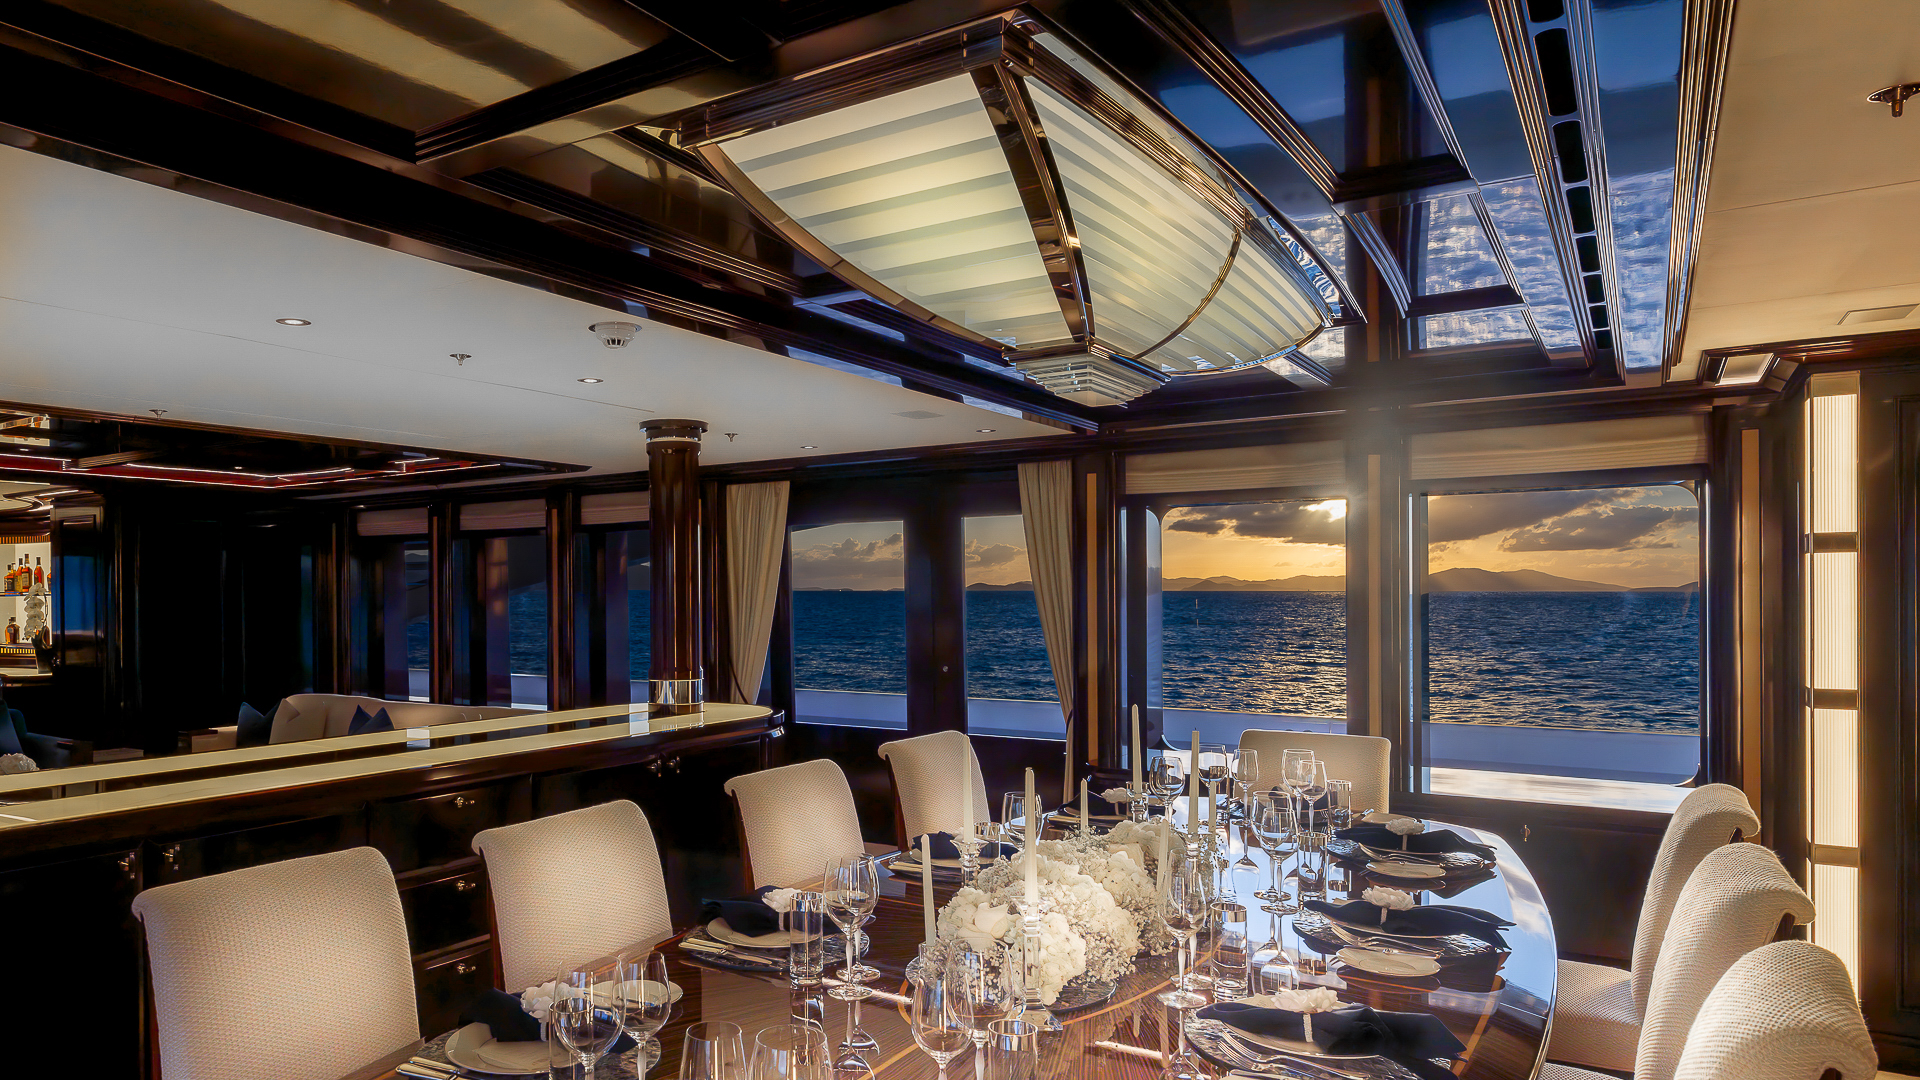 Rock It Main Deck - Elegant Dining Set Up Credit Yachting Image